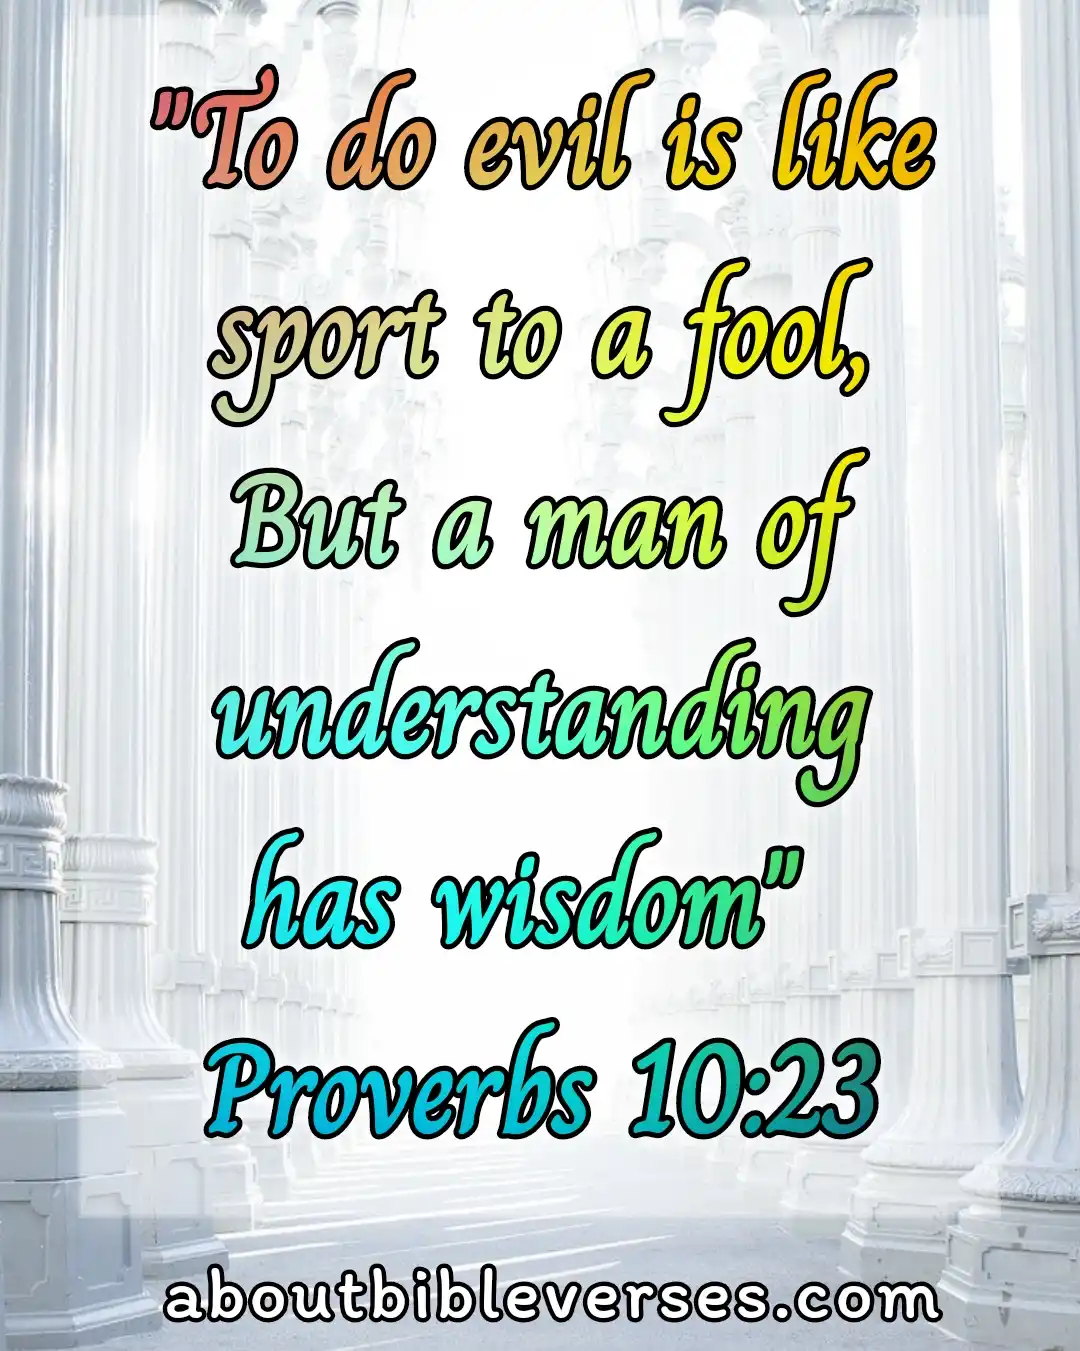 today bible verse (Proverbs 10:23)